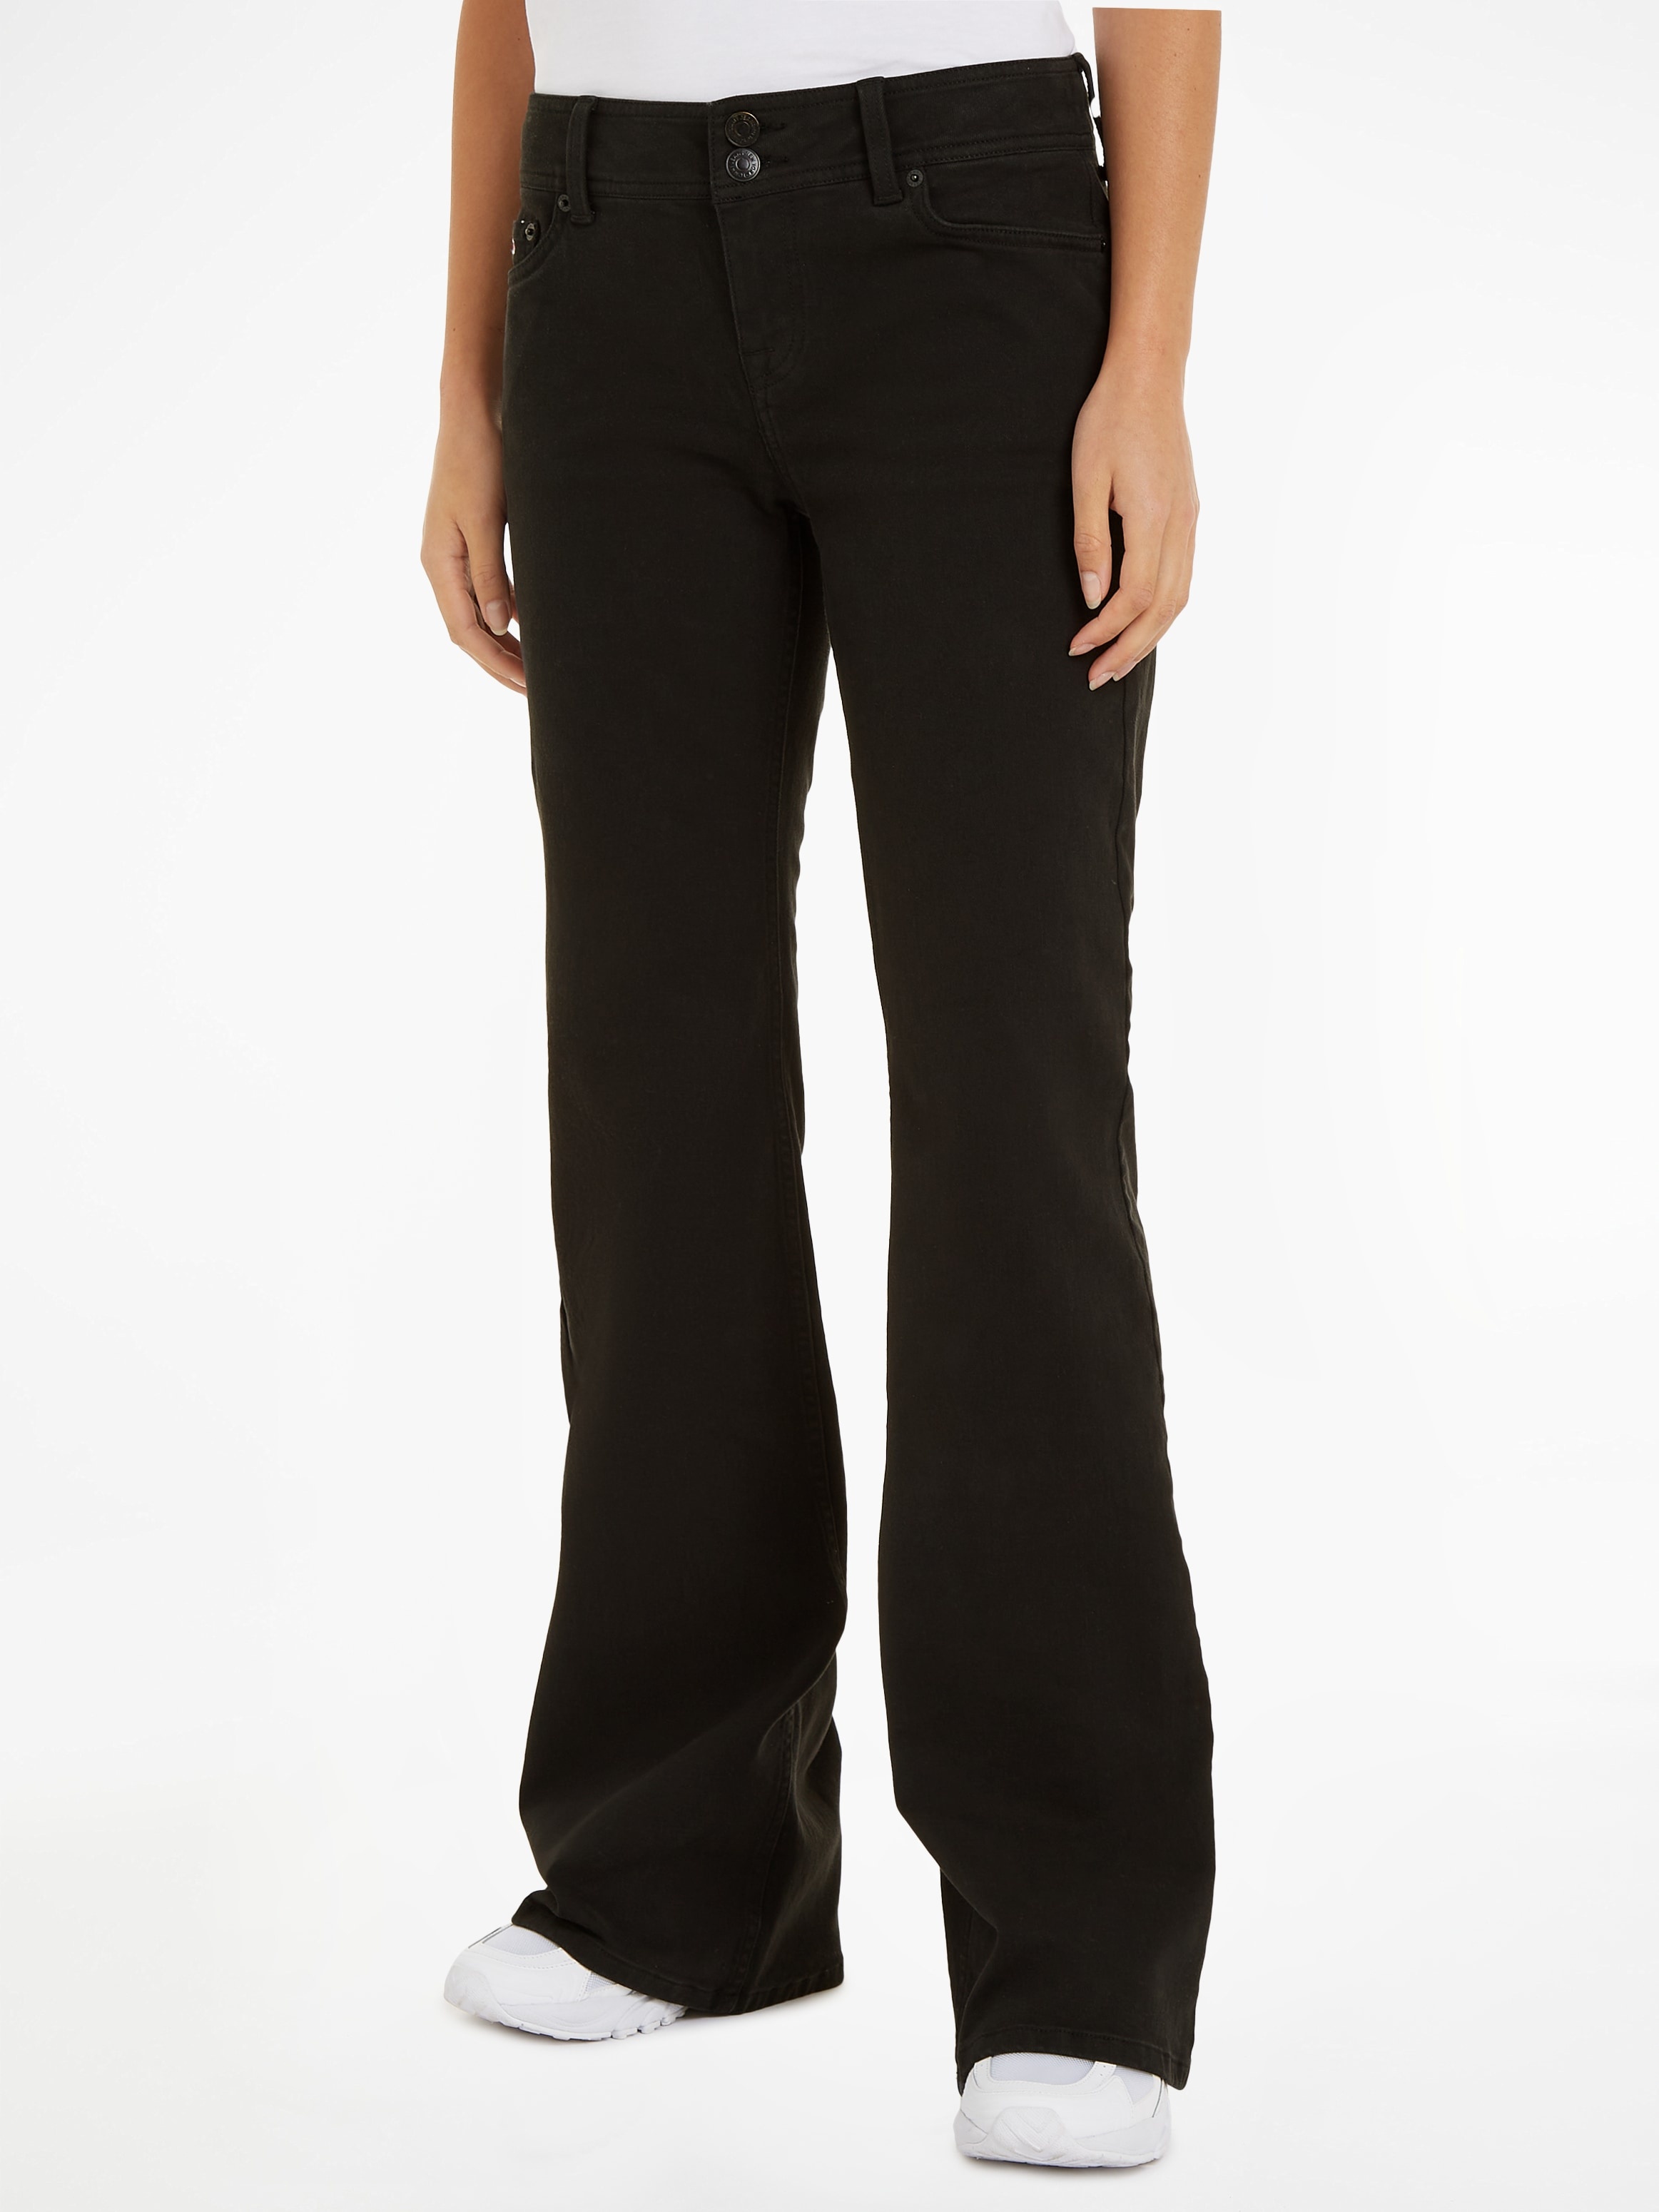 Webhose TOMMY JEANS "TJW GMD SOPHIE LW FLARE" Gr. 32, Länge 32, schwarz (black) Damen Hosen 5-Pocket-Jeans Stoffhosen